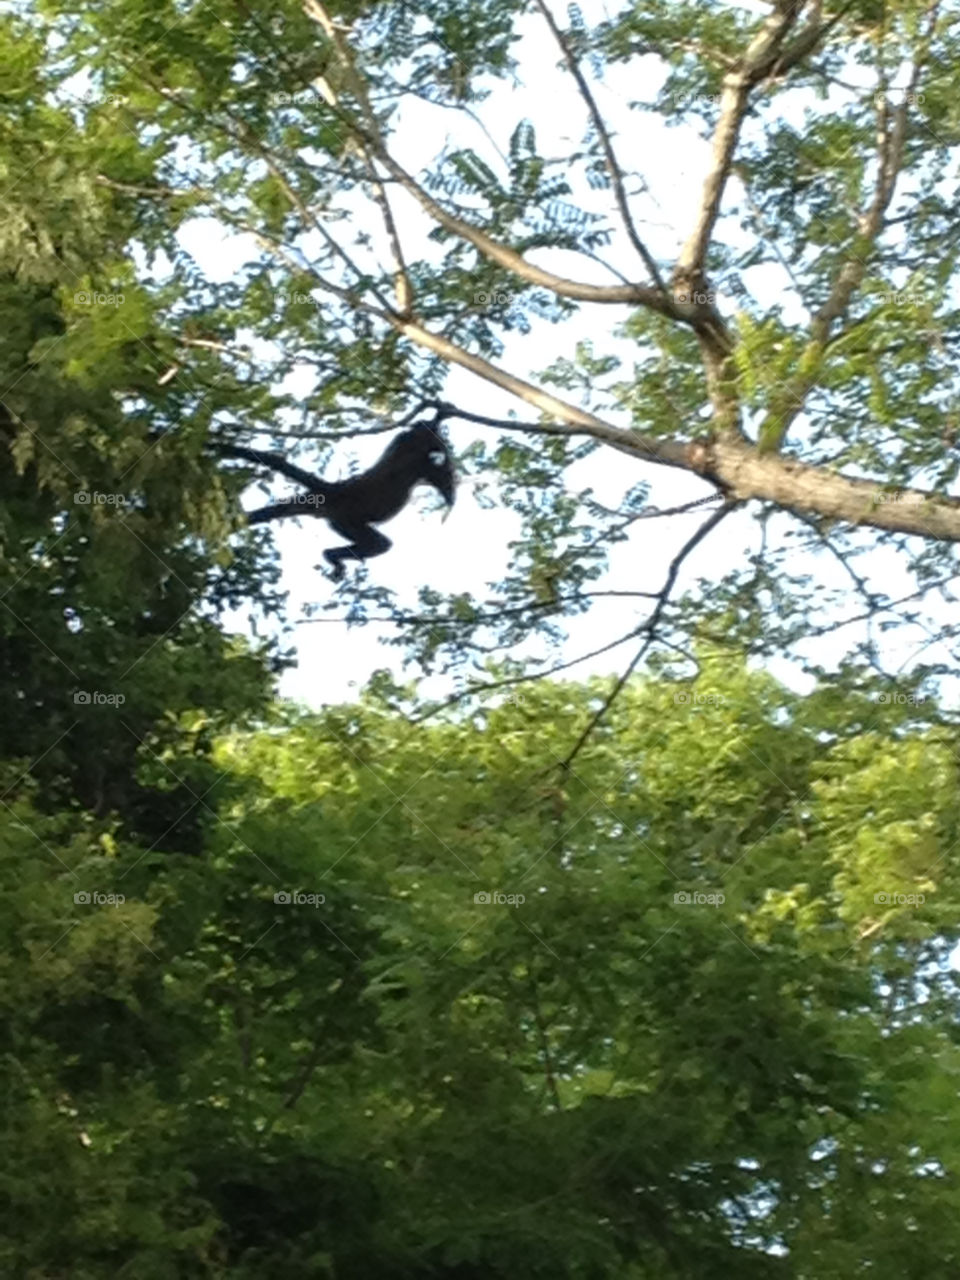 Monkeys swinging